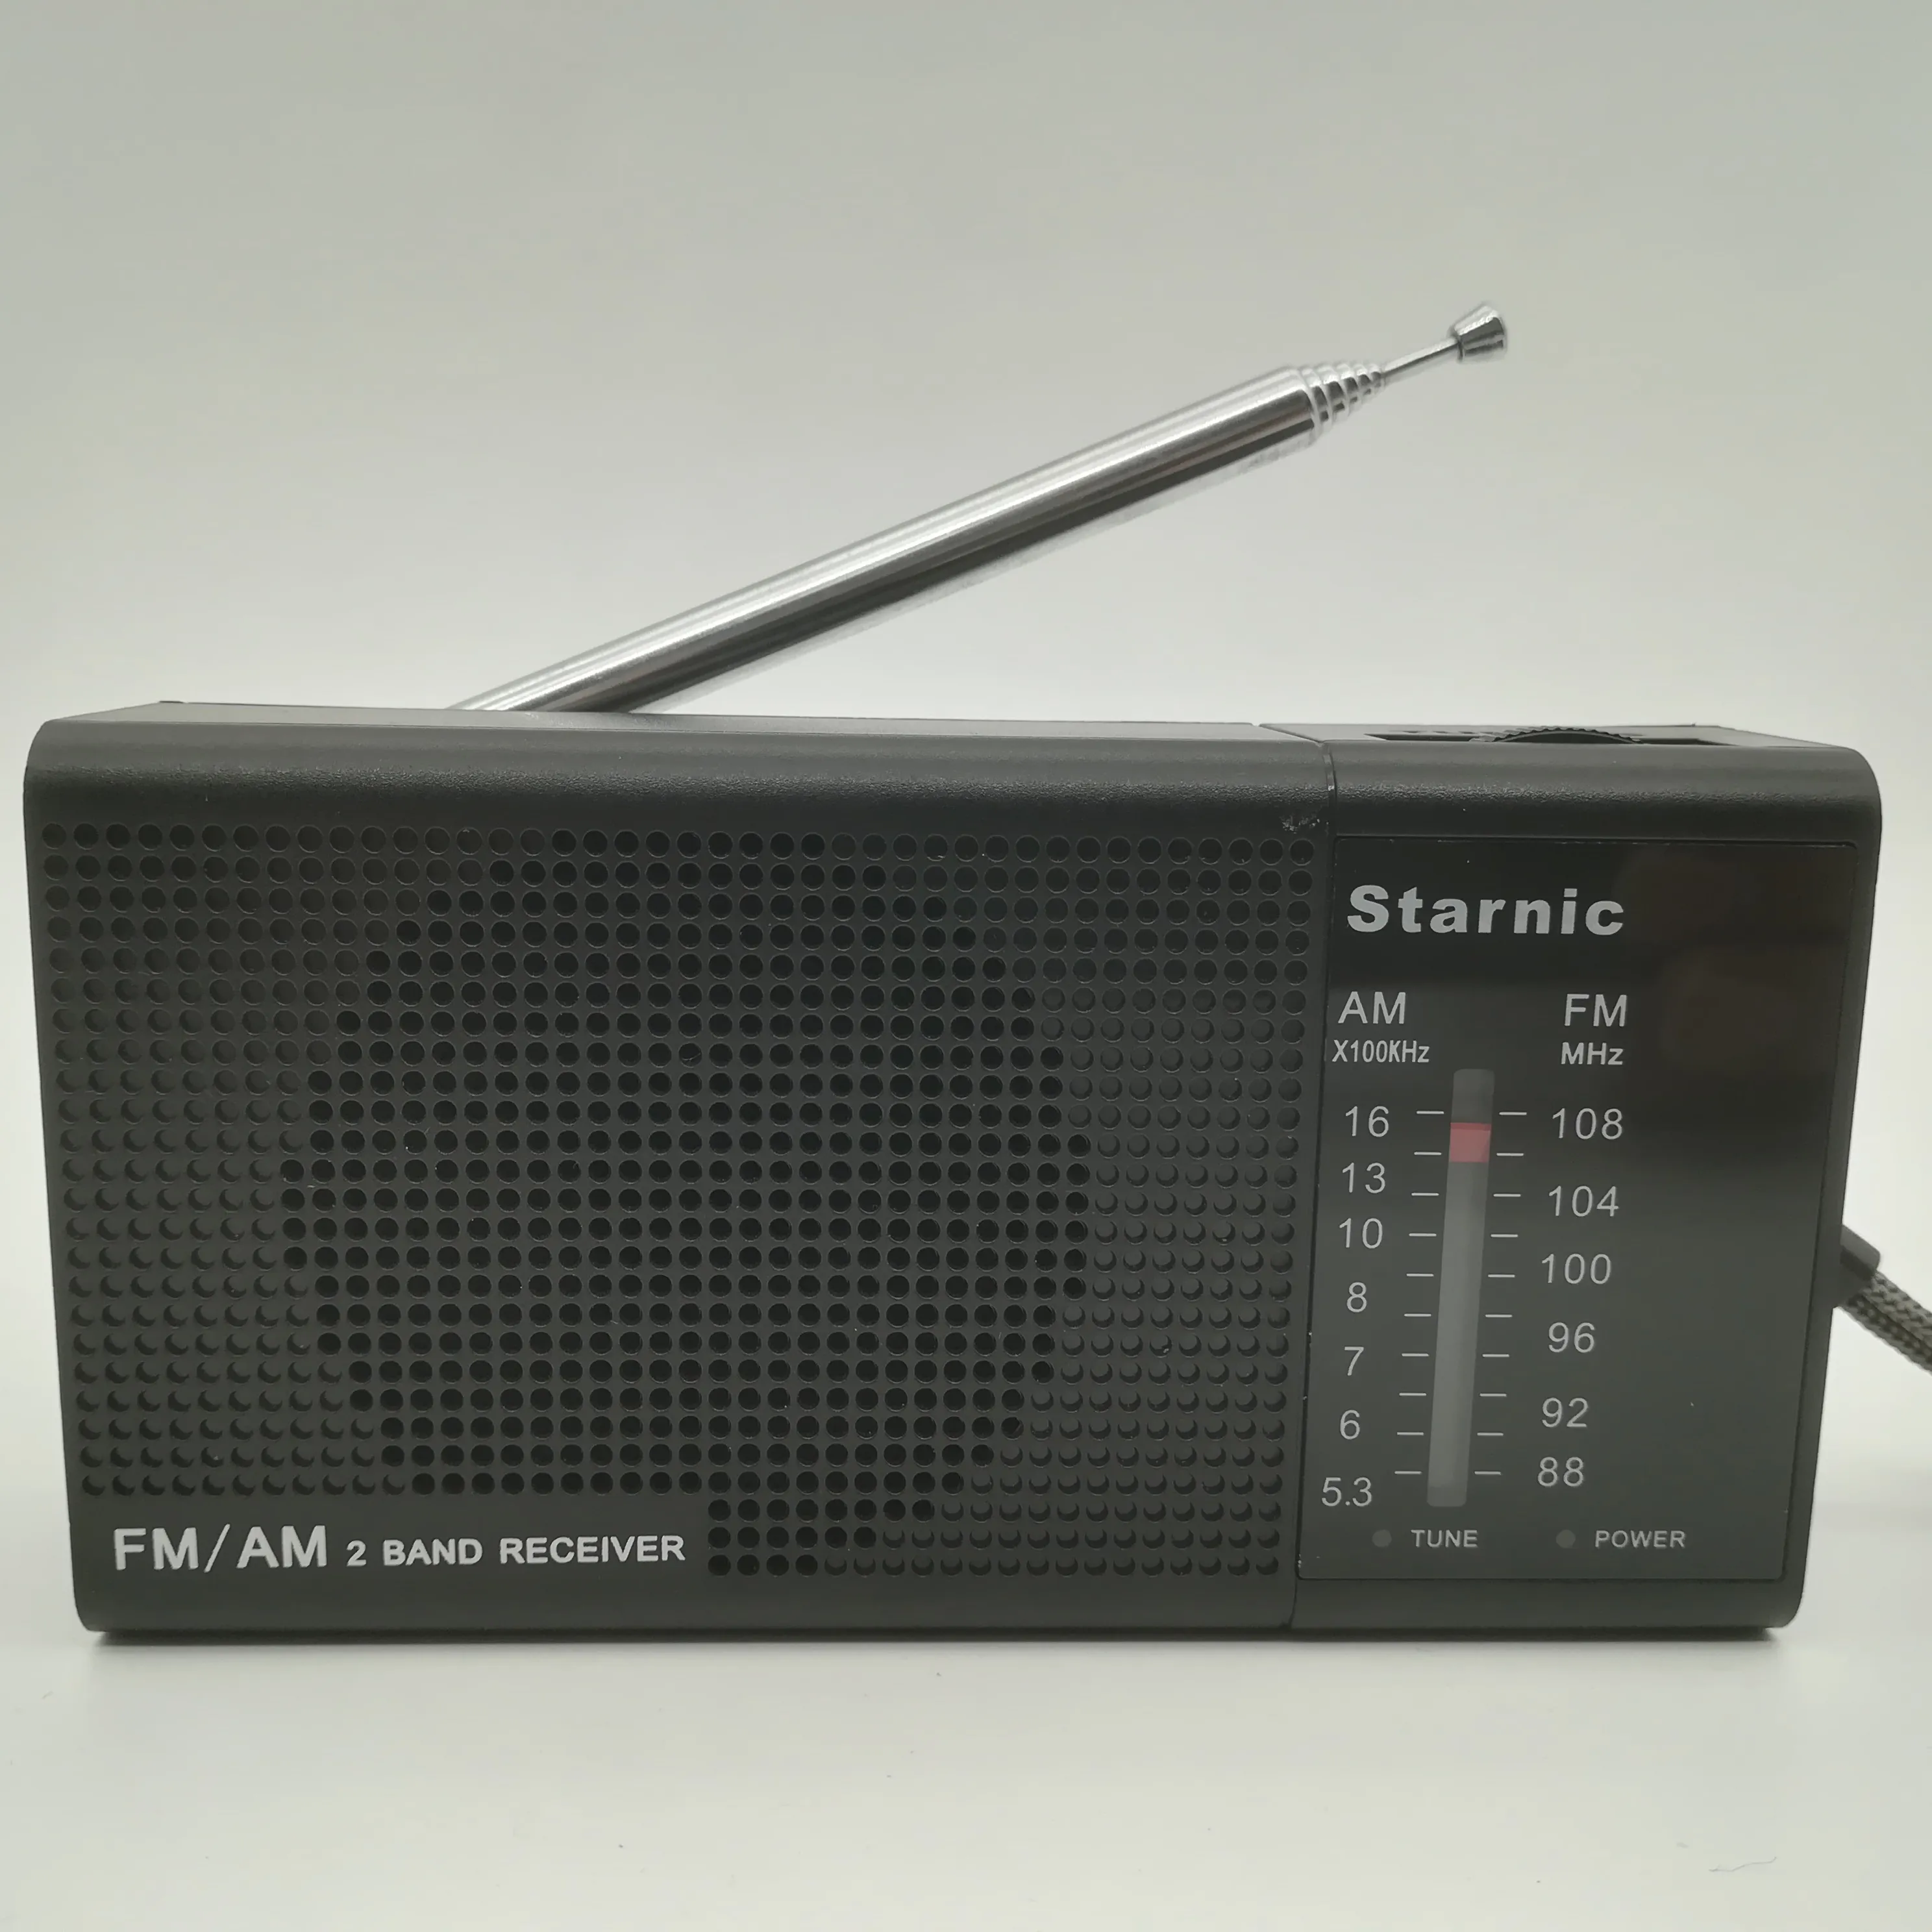 Yüksek hassasiyetli dünya alıcısı FM AM 2 band mini/cep kısa dalga analog radyo